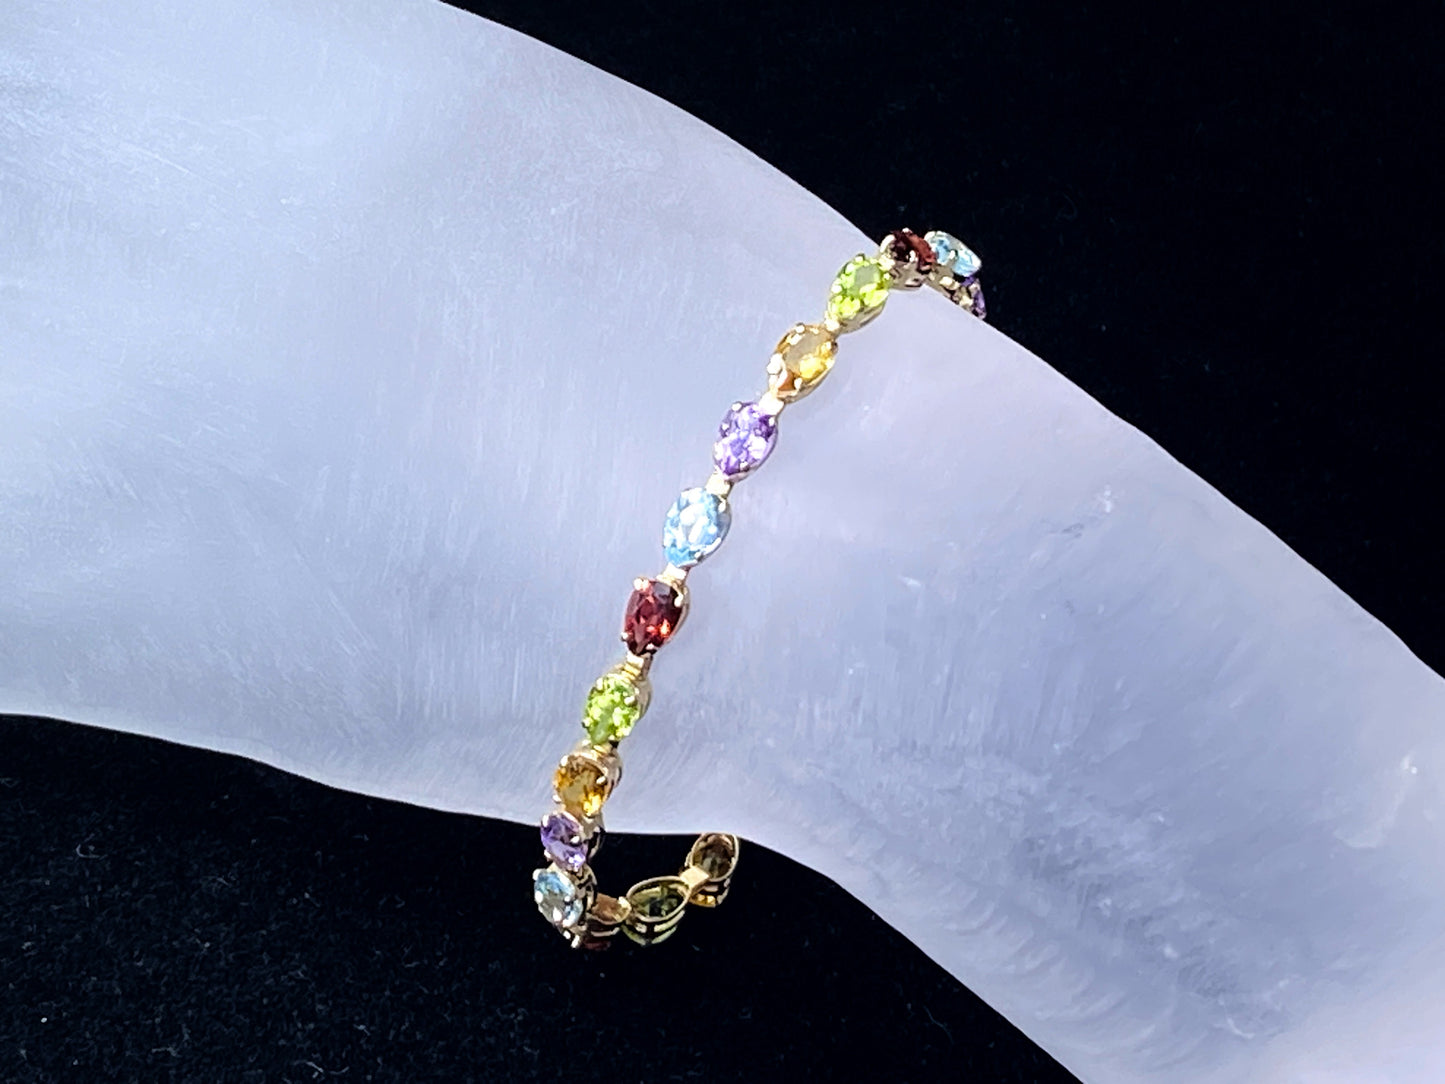 10.74ct Marquise cut Rainbow gemstone Tennis bracelet in 14K